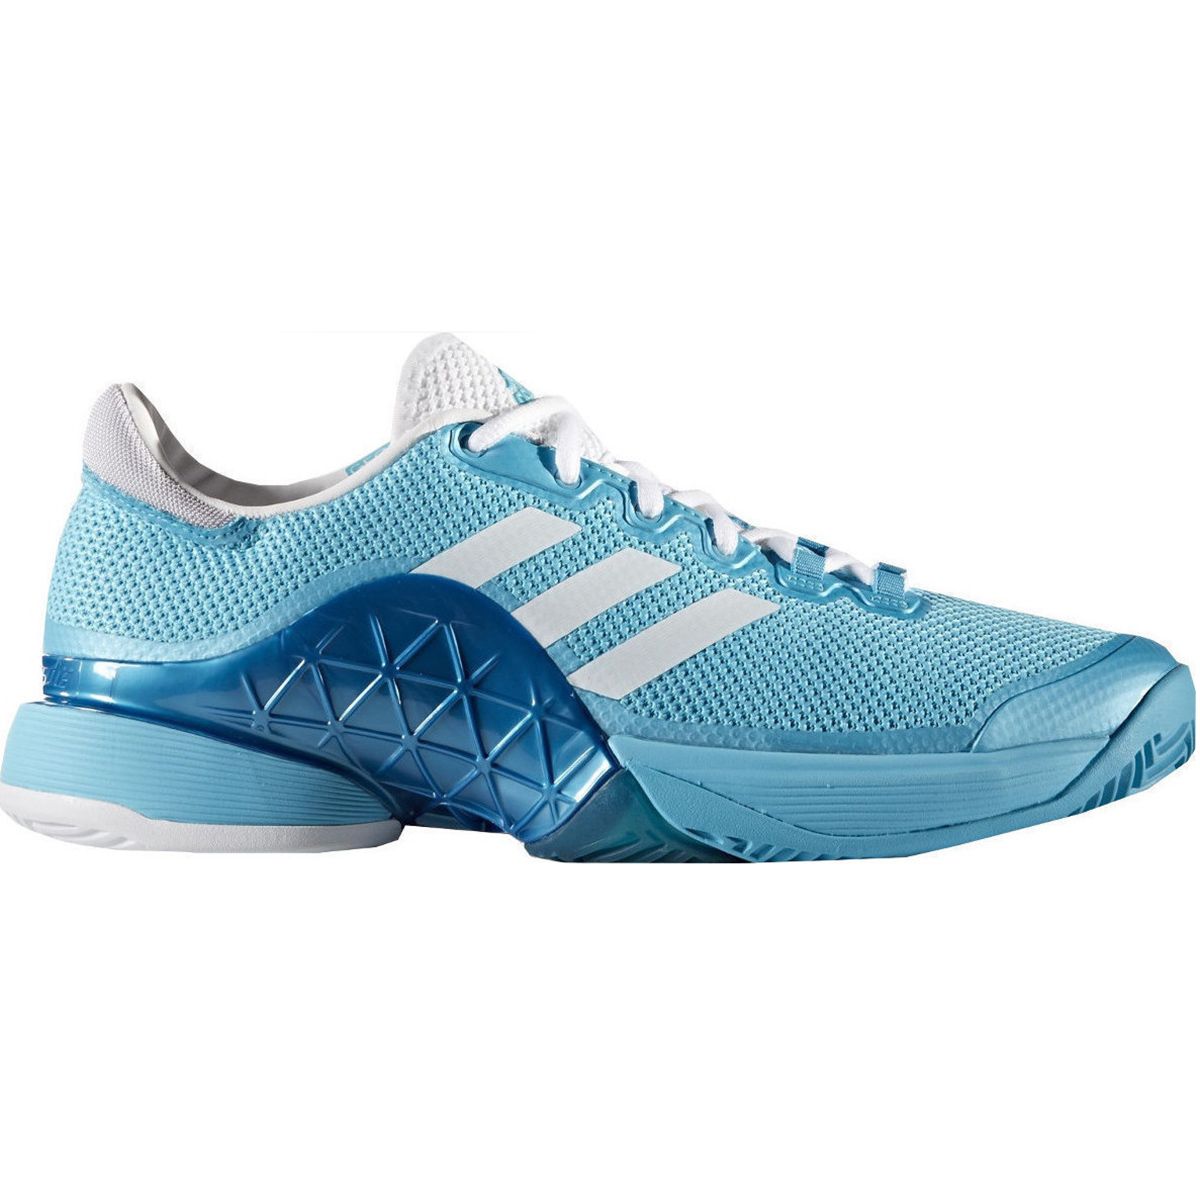 Adidas Men's Tennis Shoes AQ6295